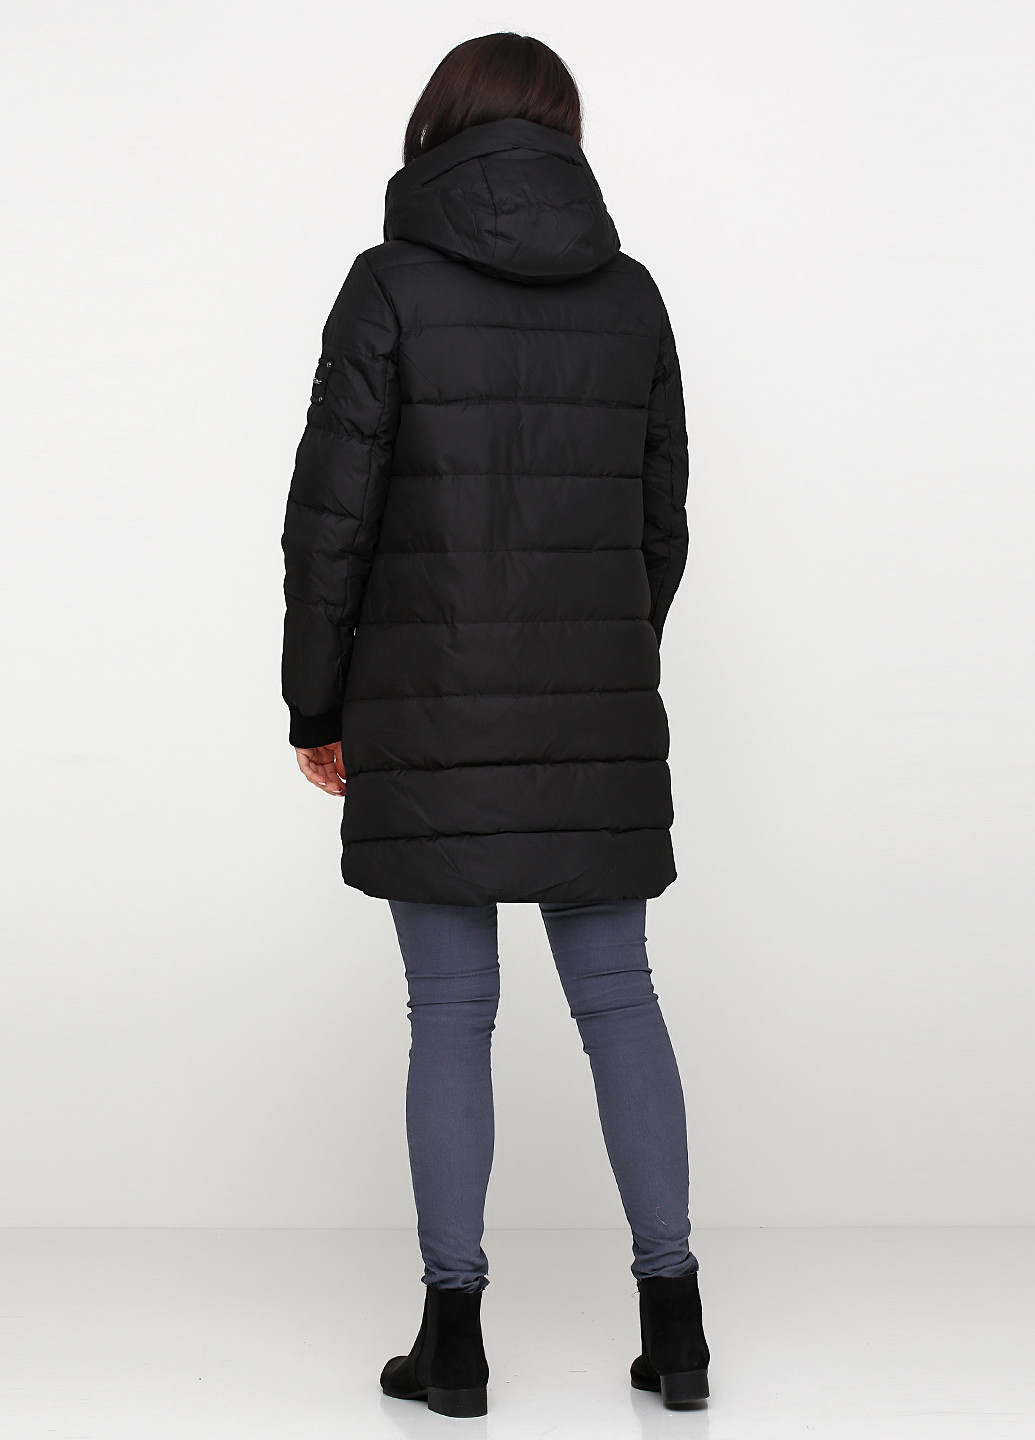 Черная зимняя куртка Lora Duvetty